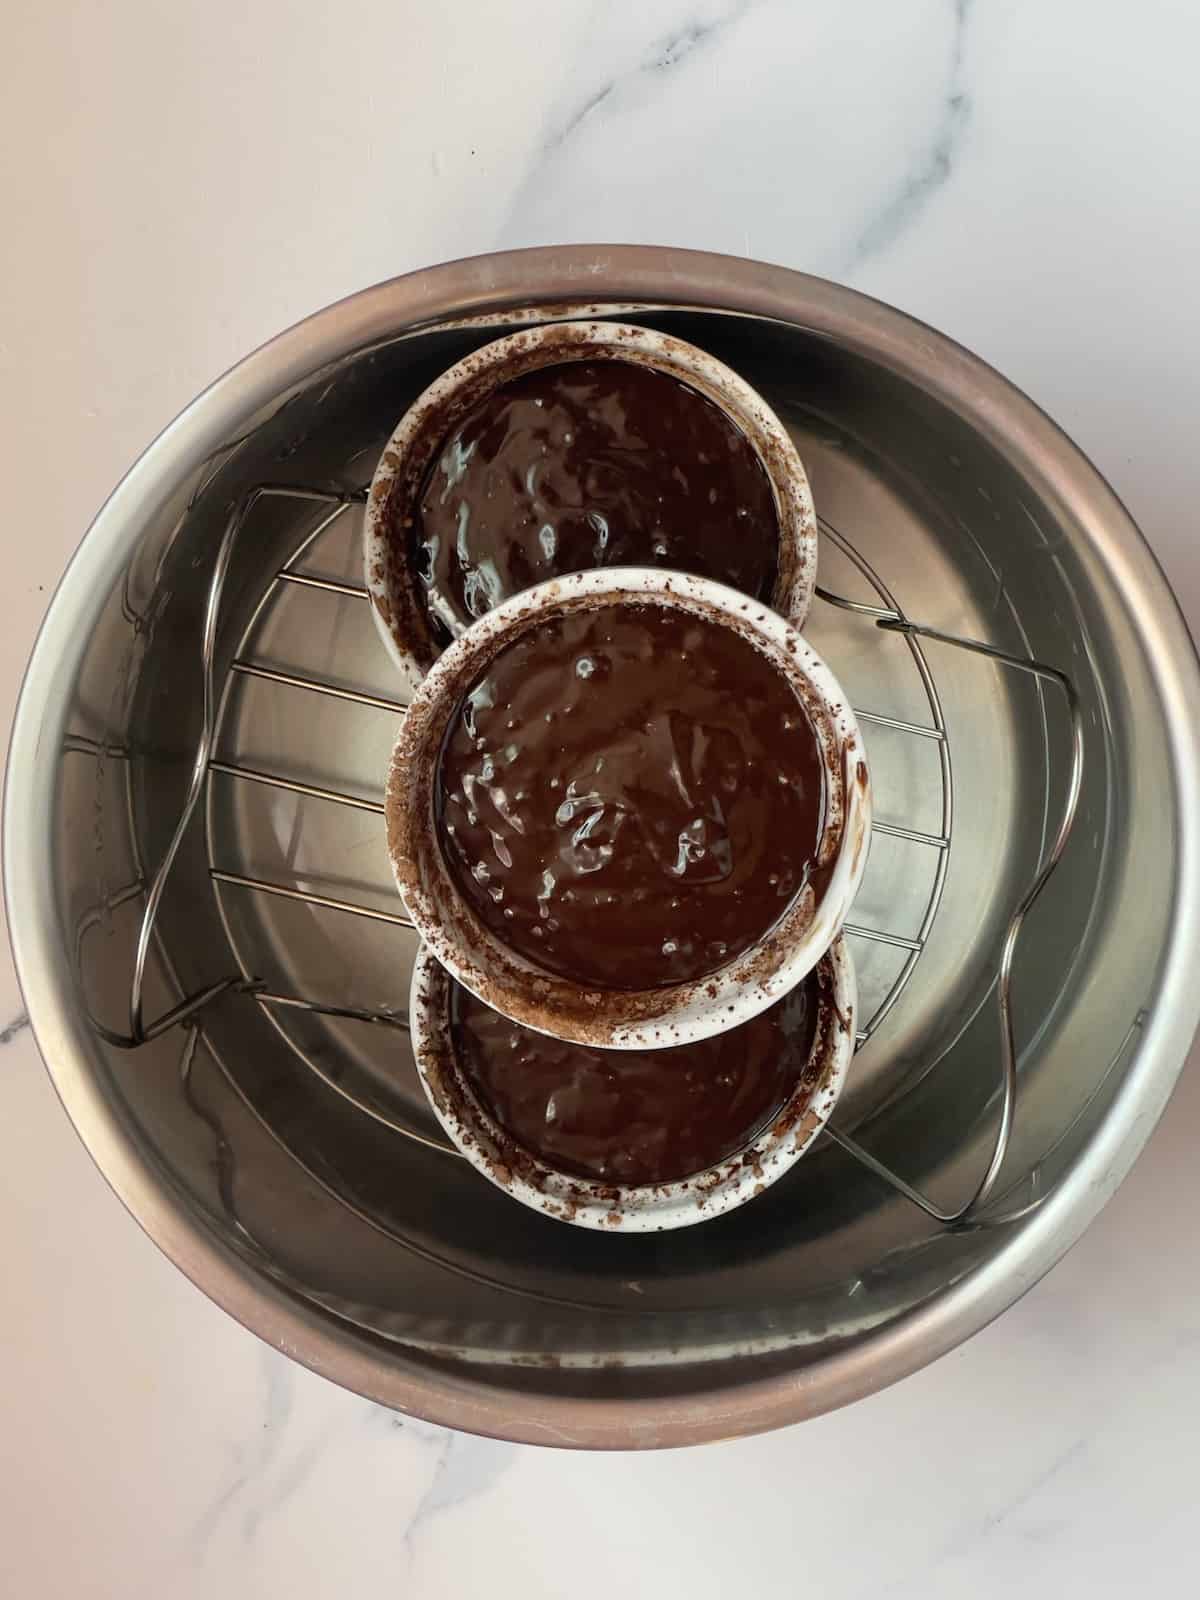 lava cakes inside the inner pot of a pressure cooker